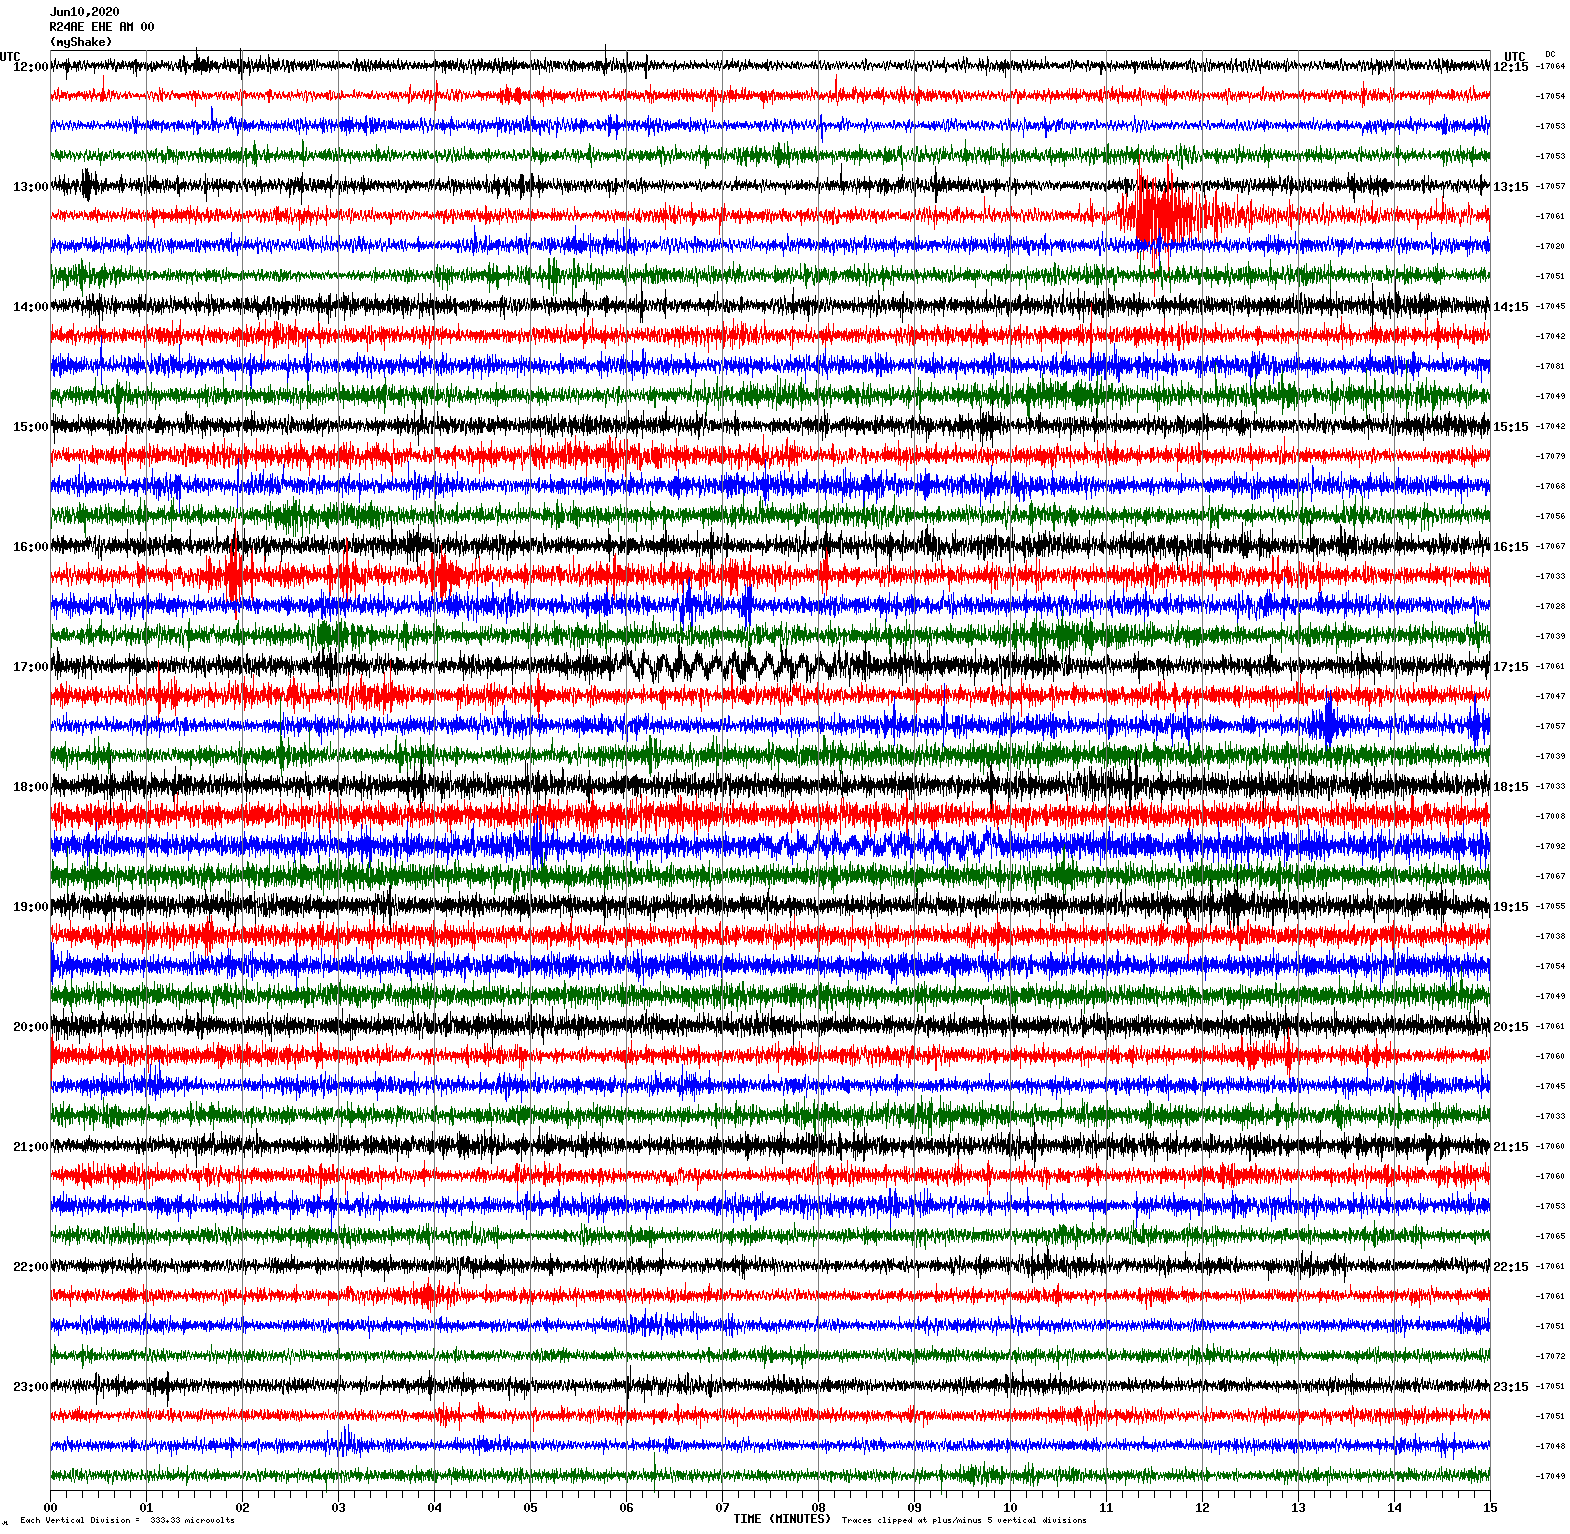 /seismic-data/R24AE/R24AE_EHE_AM_00.2020061012.gif